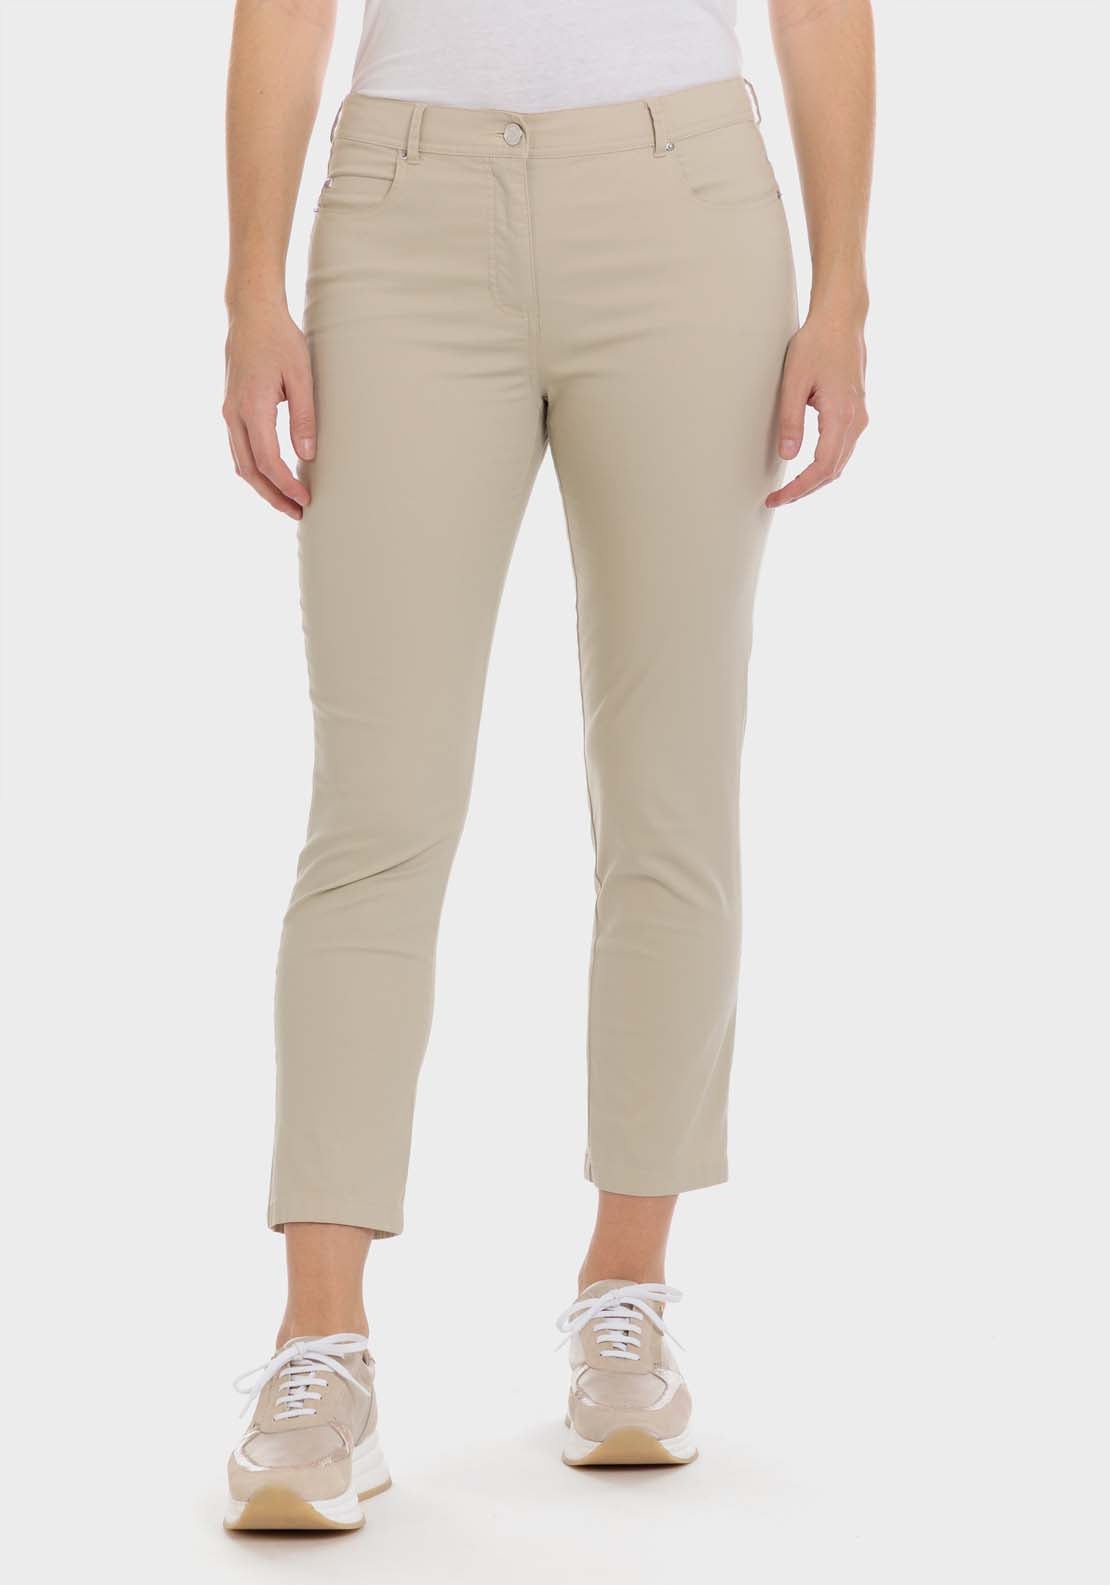 Punt Roma Cotton Capri Trousers - Beige 1 Shaws Department Stores